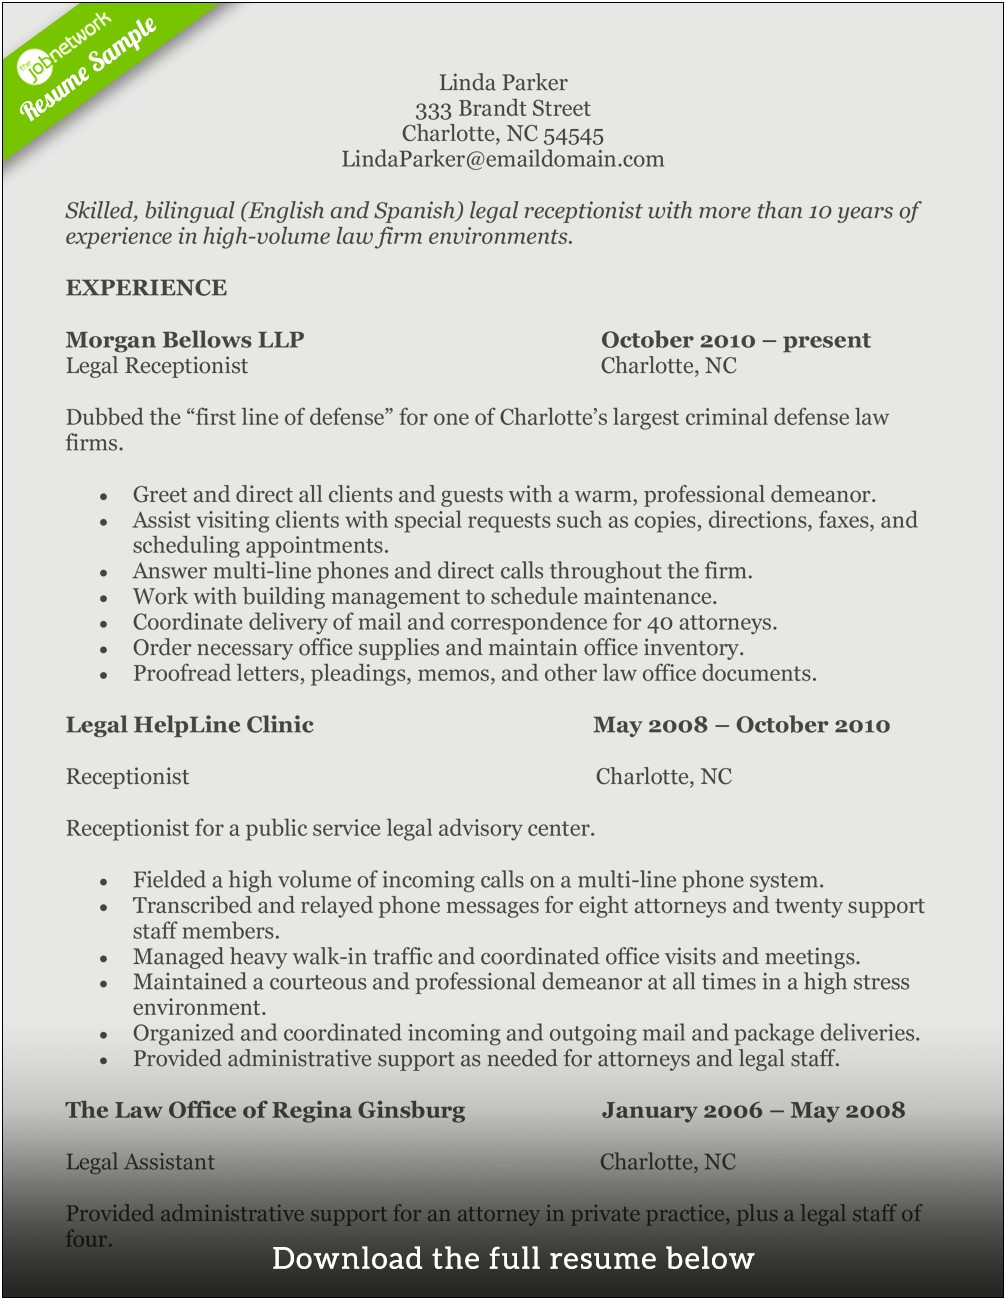 Sample Resume For Medical Assistant Receptionist